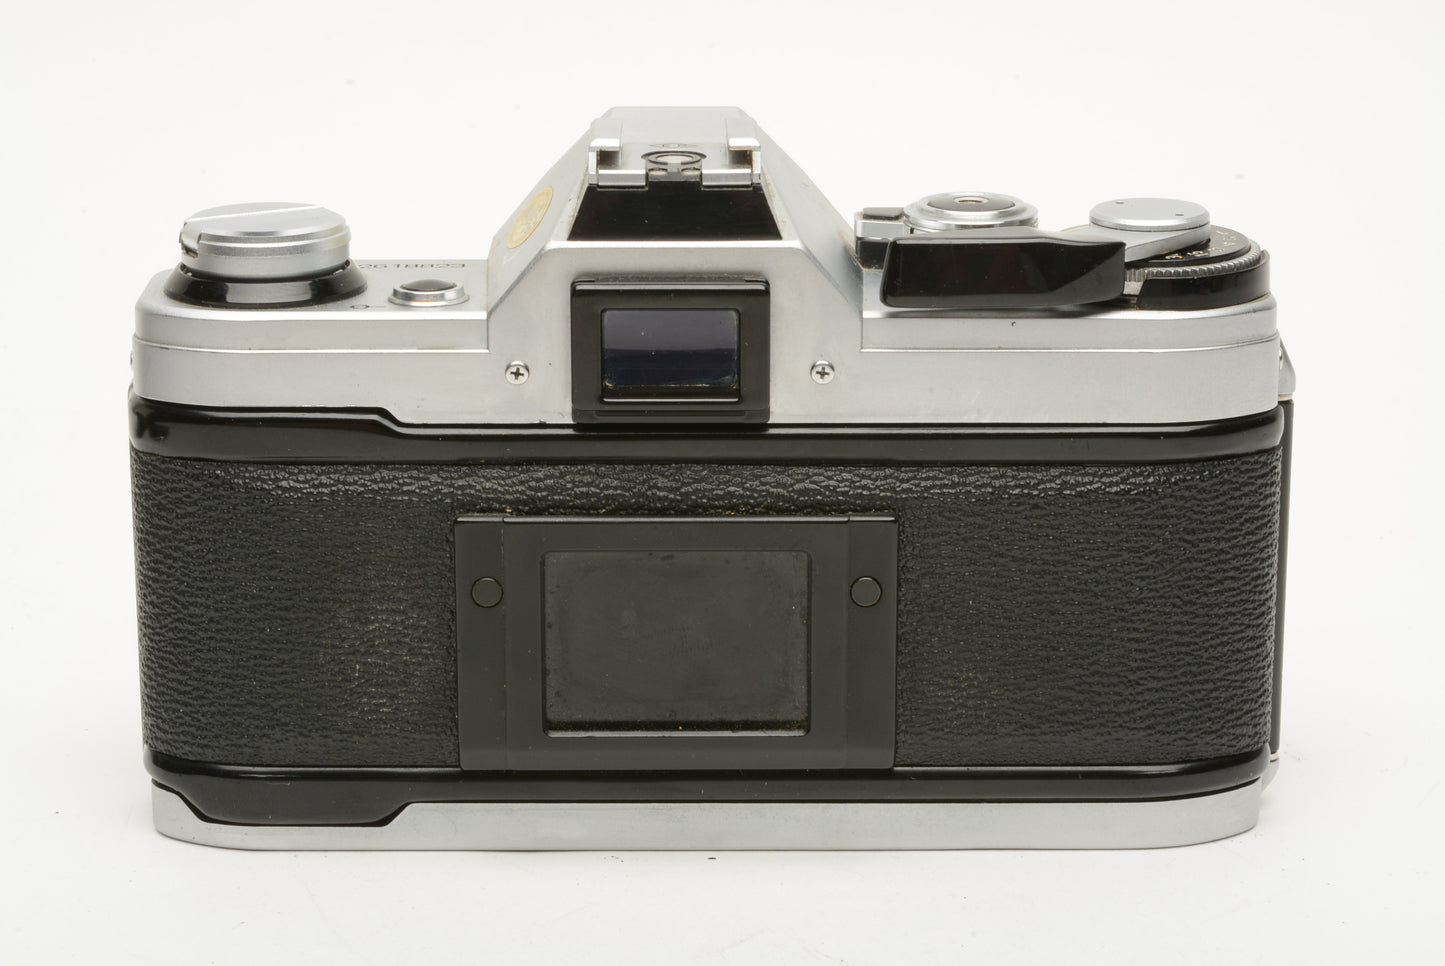 Canon AE-1 35mm SLR Camera w/50mm f/1.8 Lens, UV, Strap, New Seals! Nice